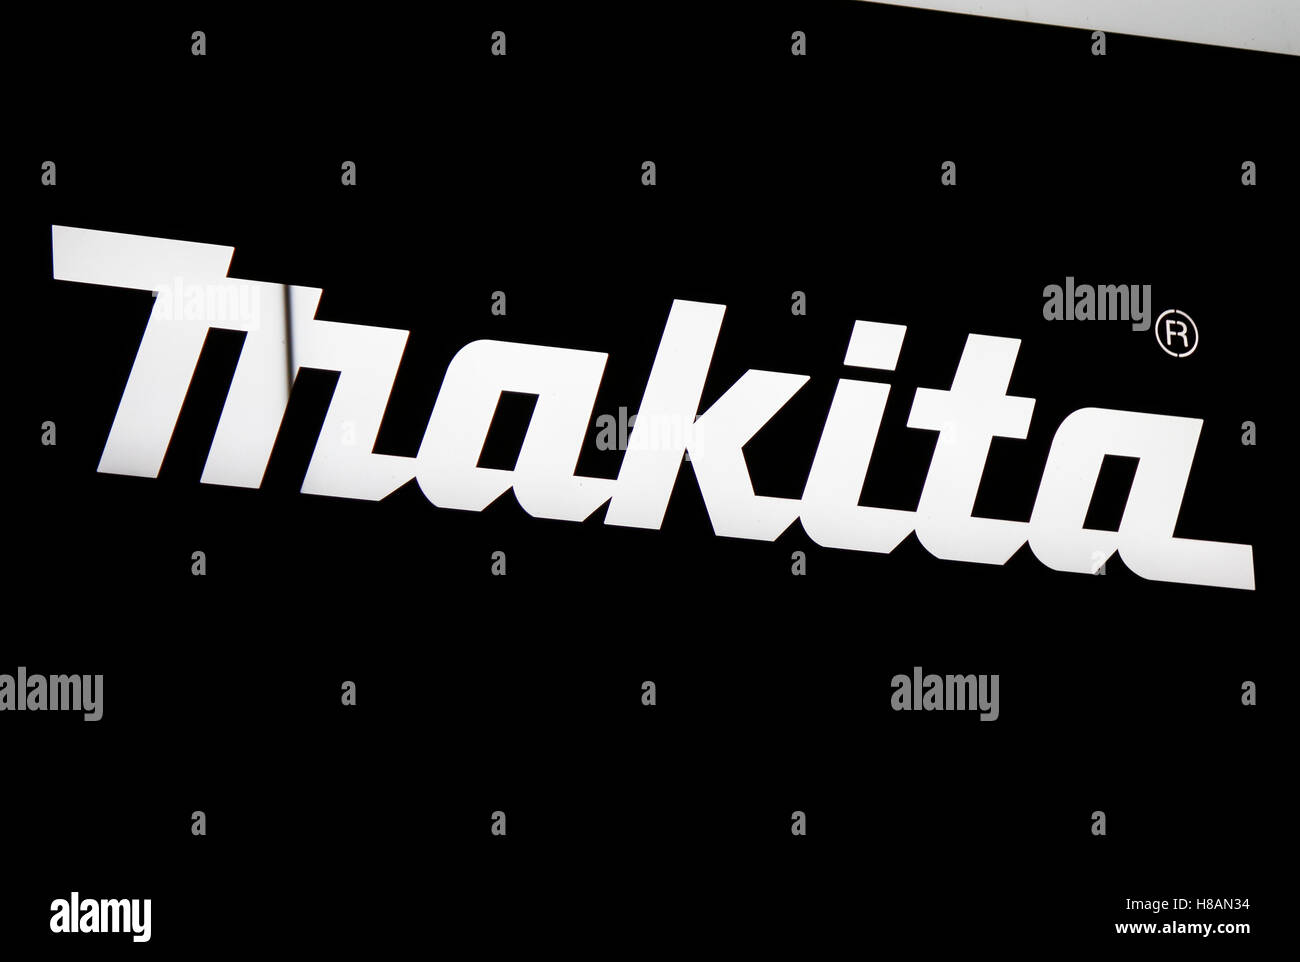 das Logo der Marke "Makita", Berlin Stock Photo - Alamy